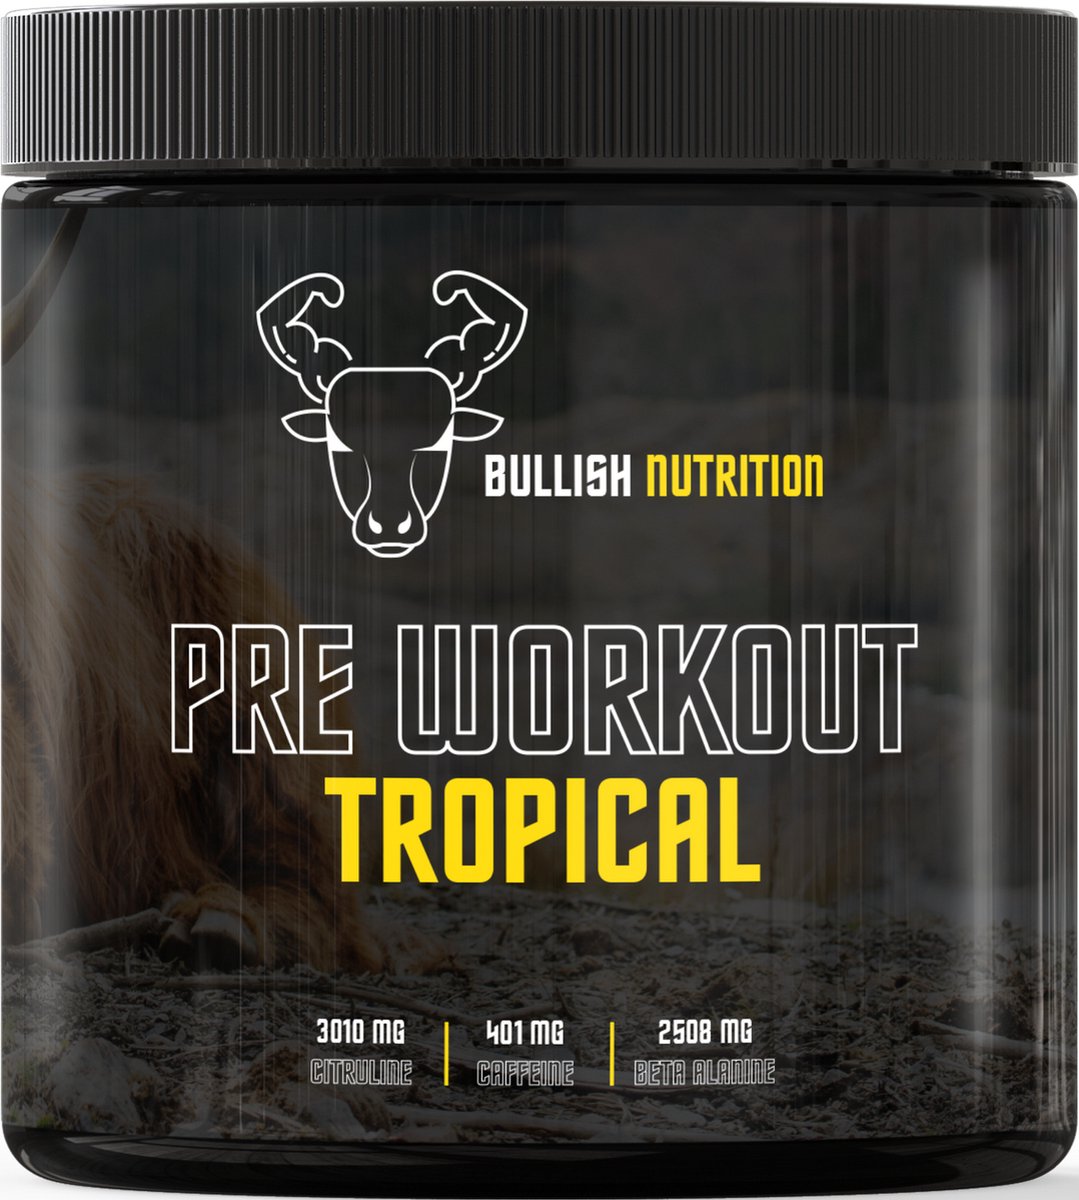 Bullishnutrition - pre workout - tropical - beste samenstelling van Nederland 401 mg cafeïne!!